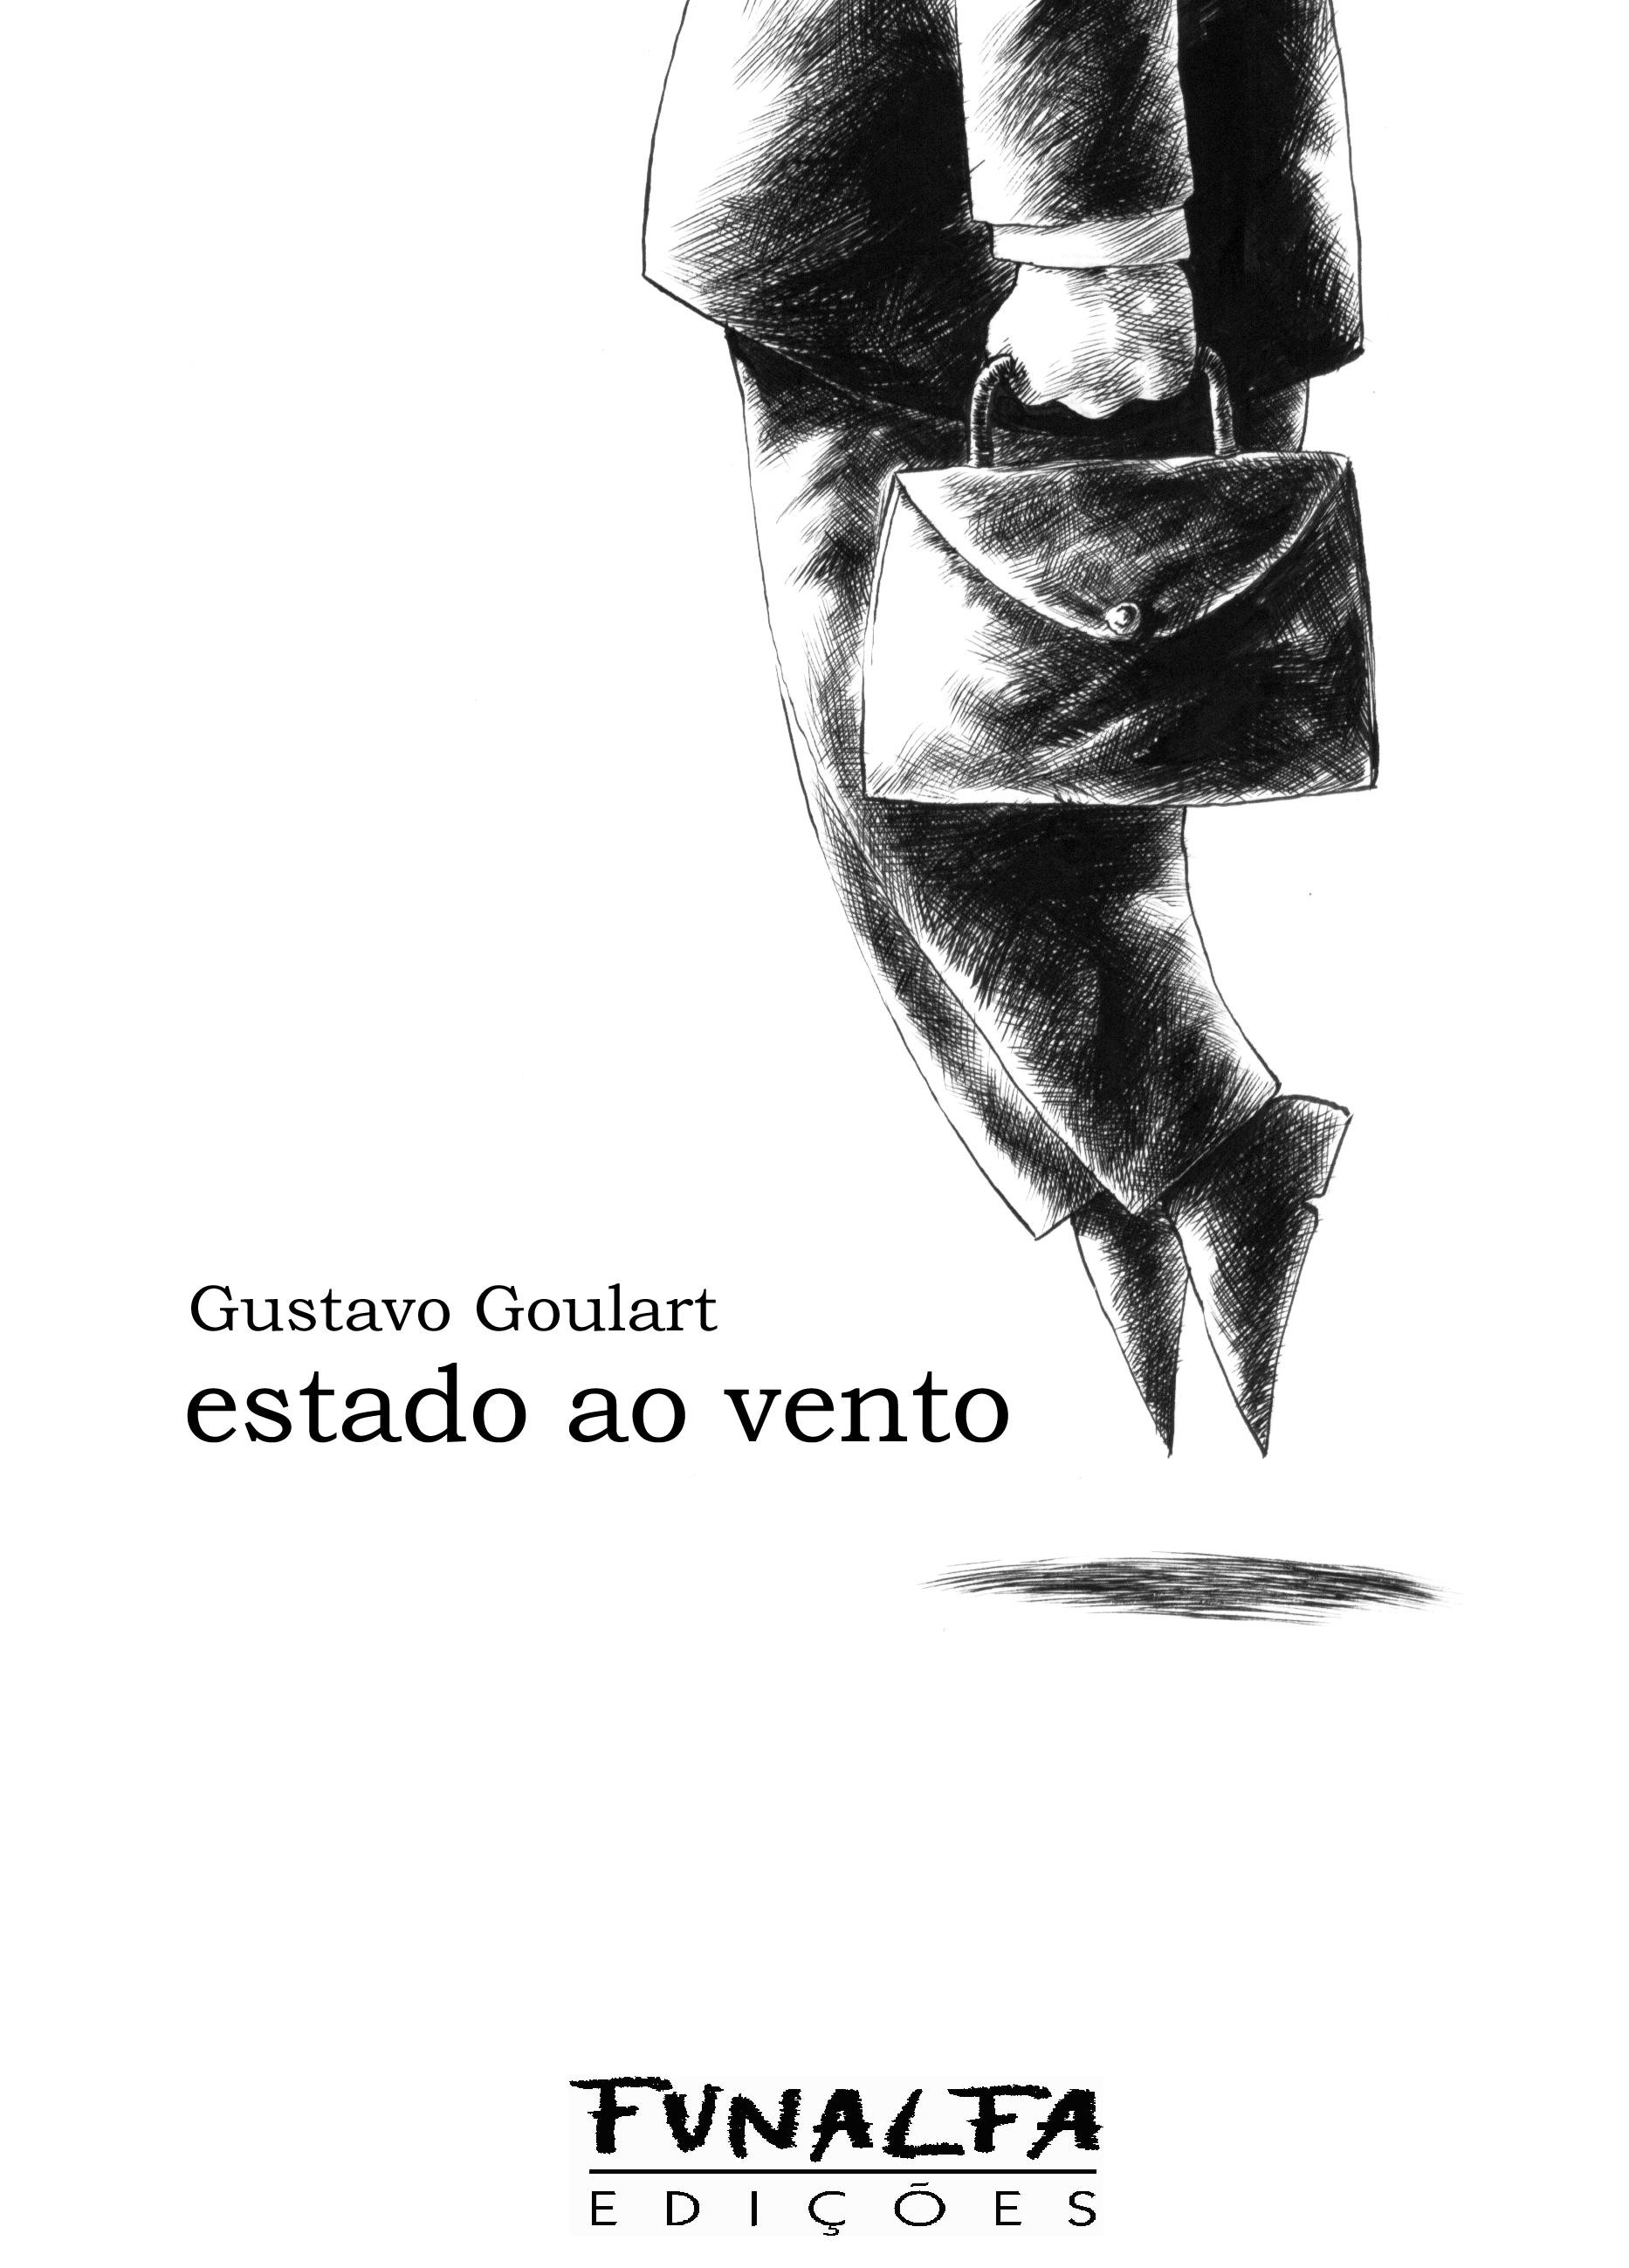 Portal de Notcias PJF | Lei Murilo Mendes - Gustavo Goulart lana livro de poemas no CCBM | FUNALFA - 18/7/2006